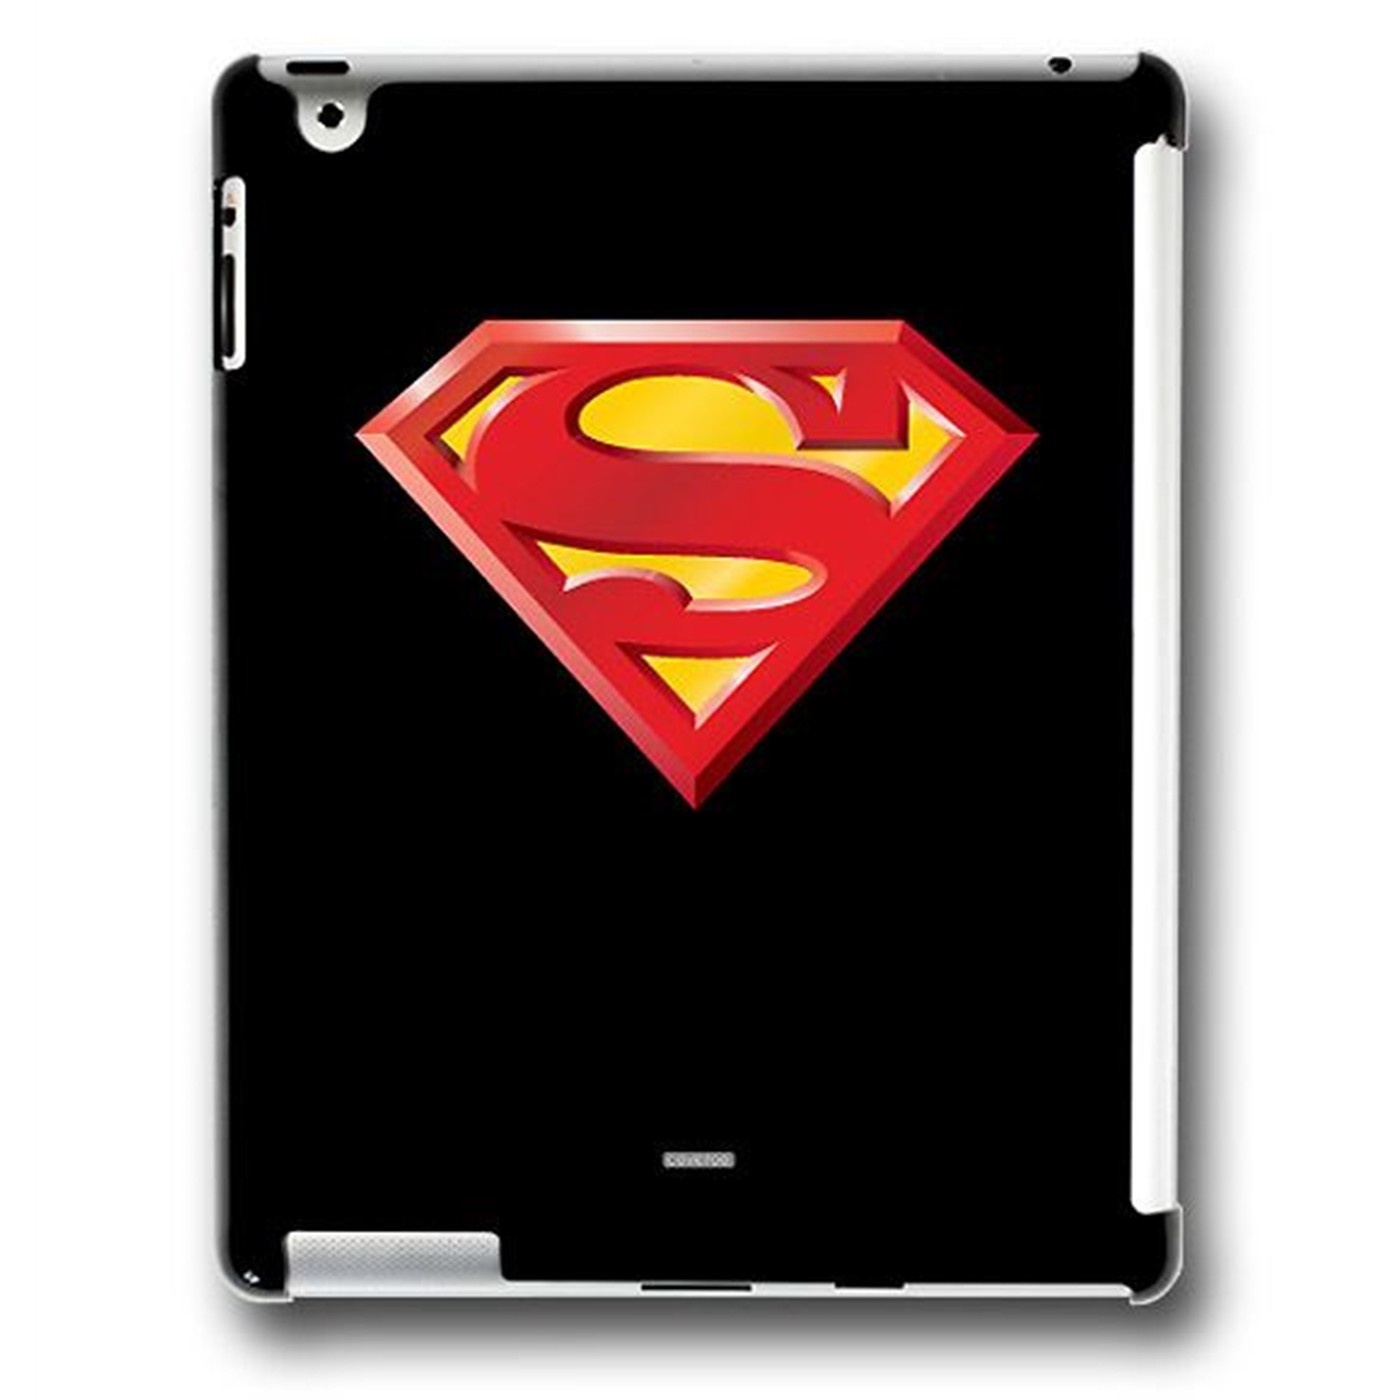 Superman Symbol iPad 2 Case